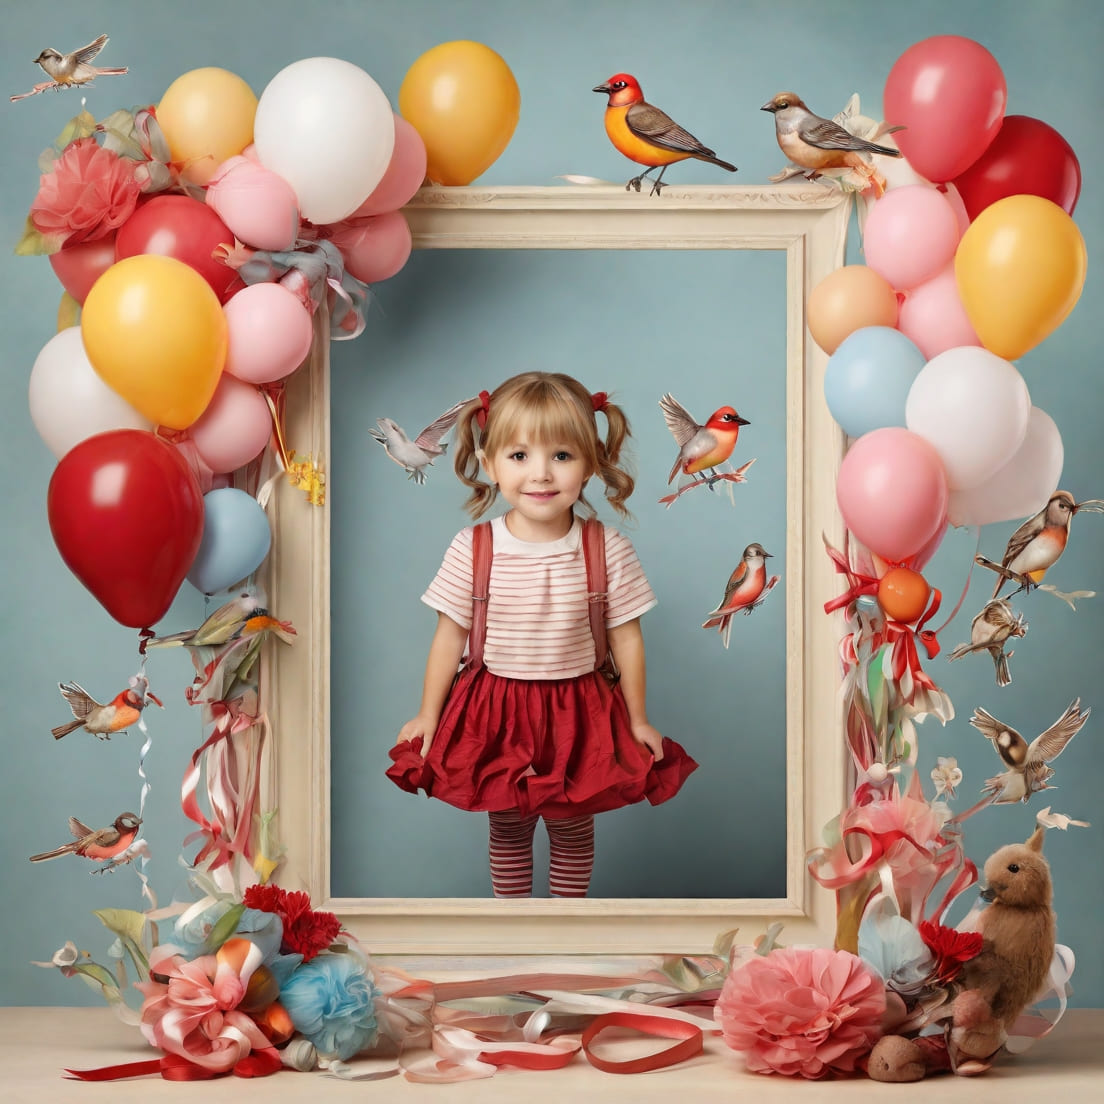 postcard, balloons, ribbons, birds, hearts, woman, man, kids cover image.